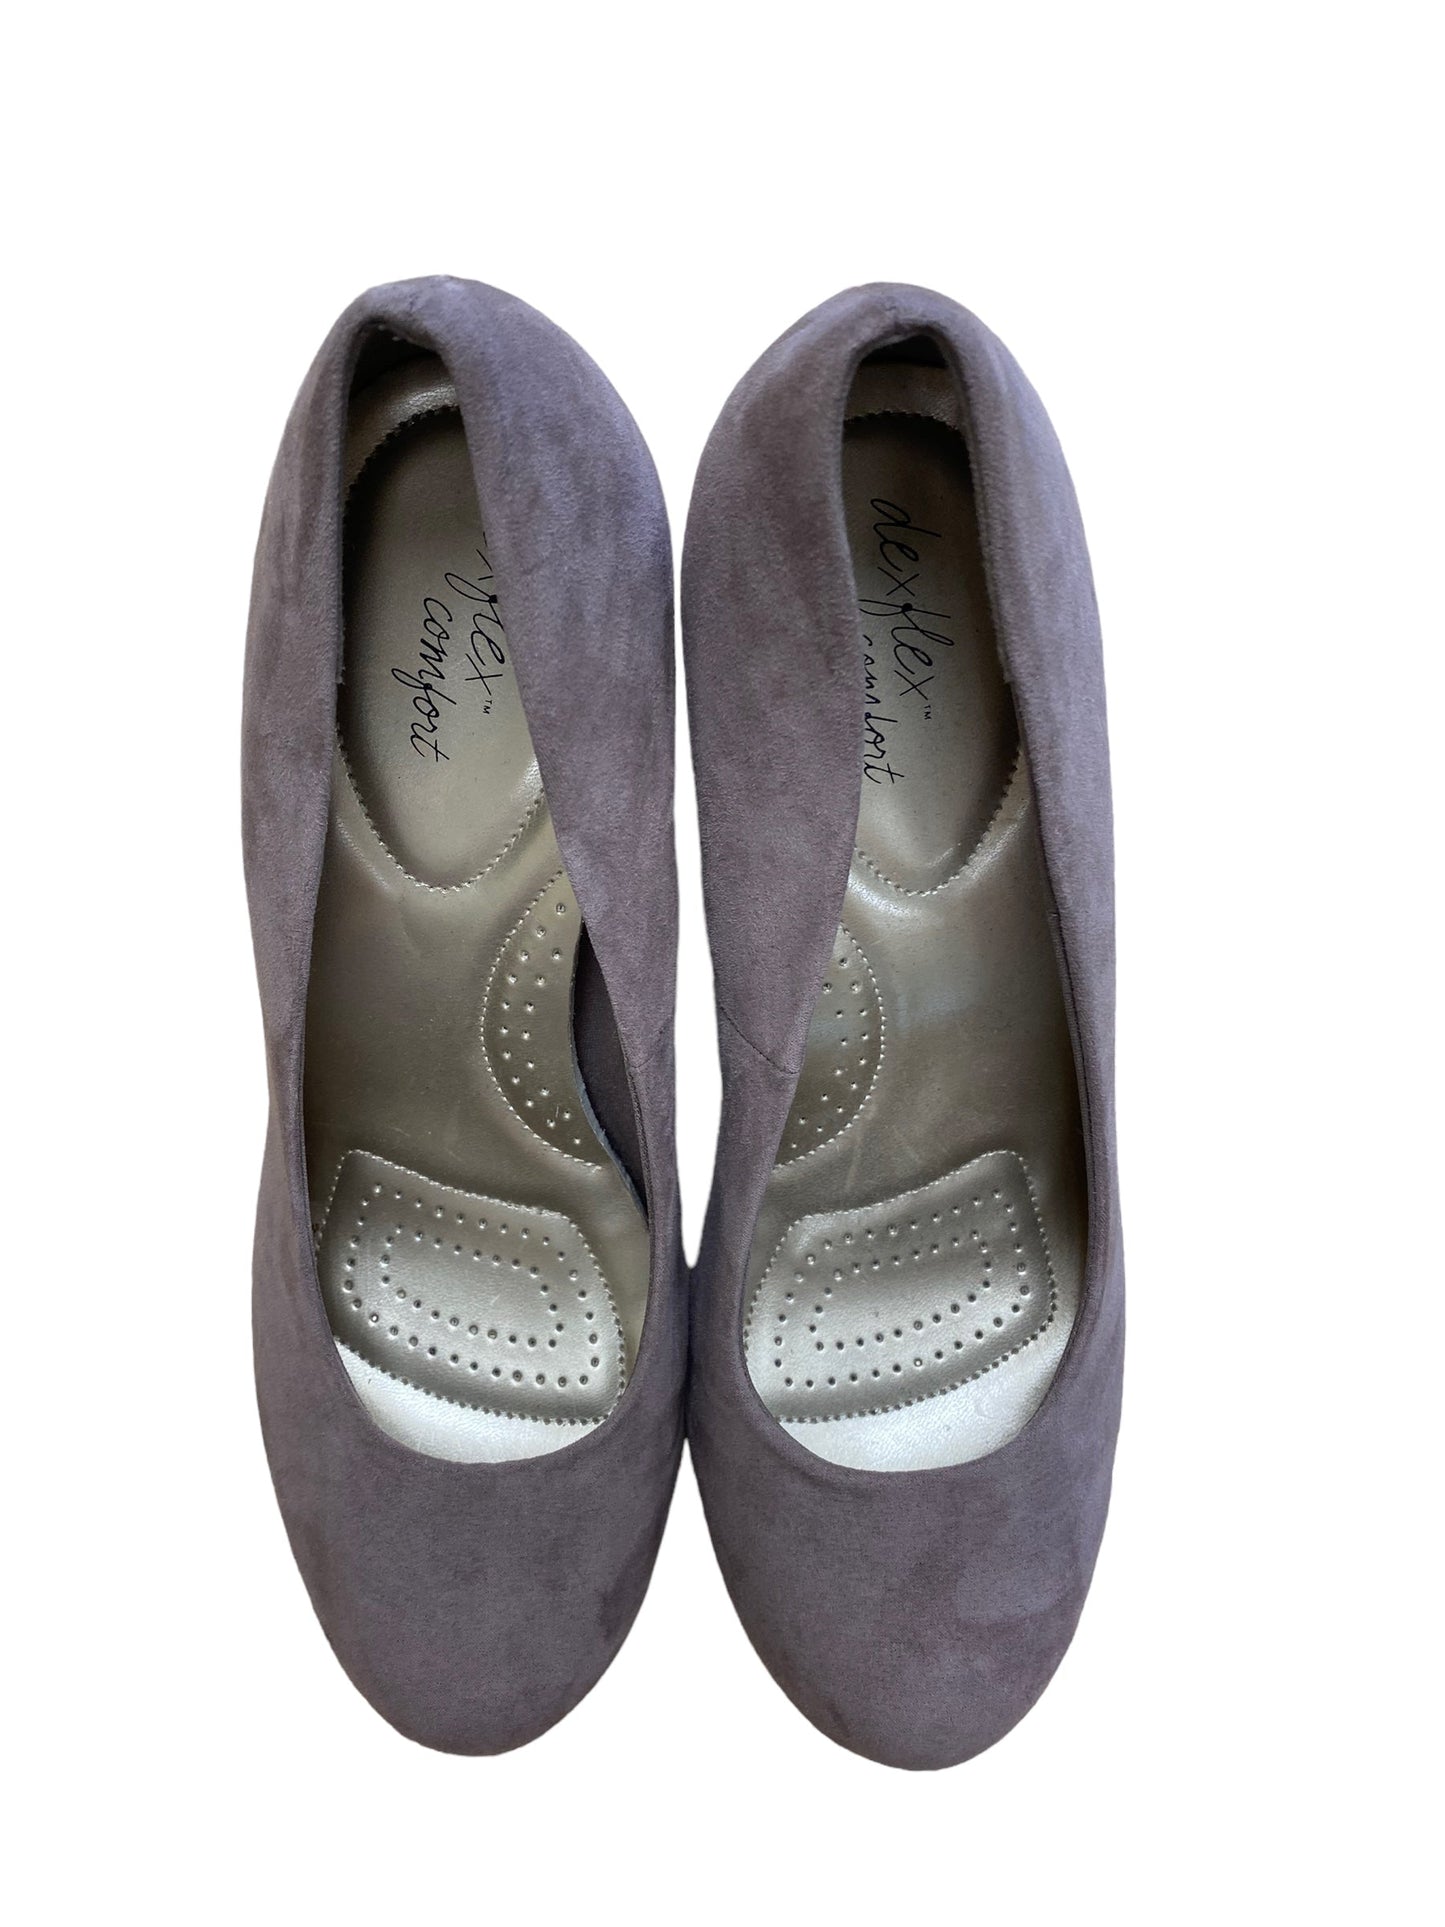 Shoes Heels Block By Dexflex  Size: 11